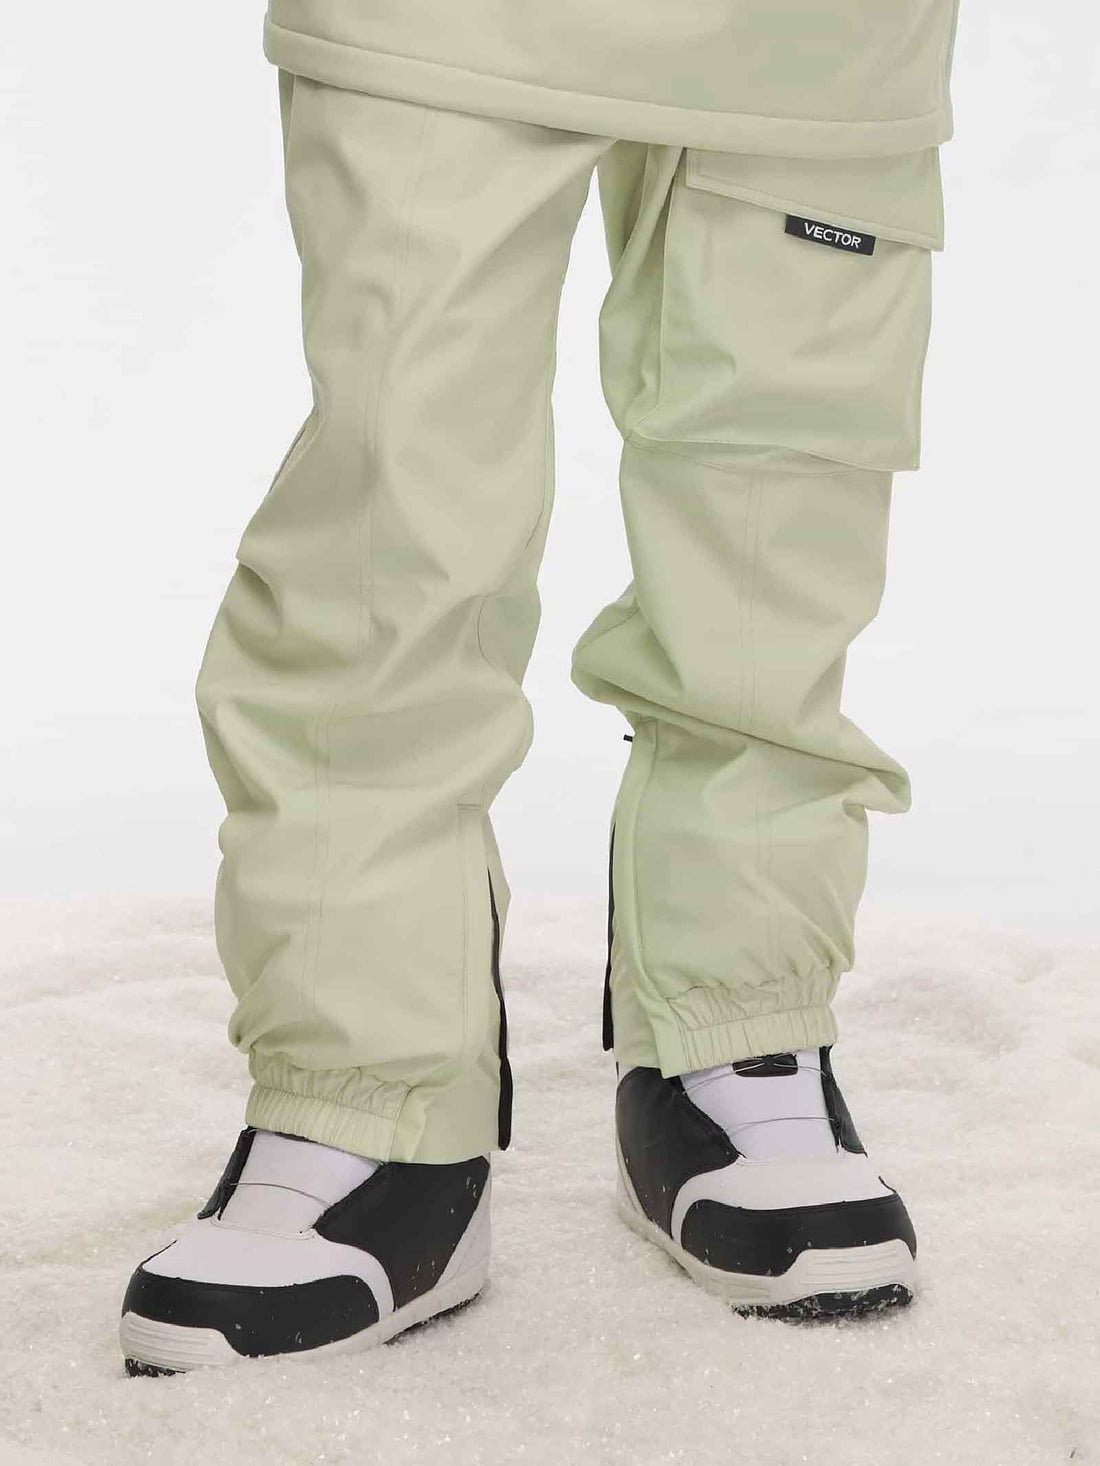 Men's Insnow Classic Snow Pants